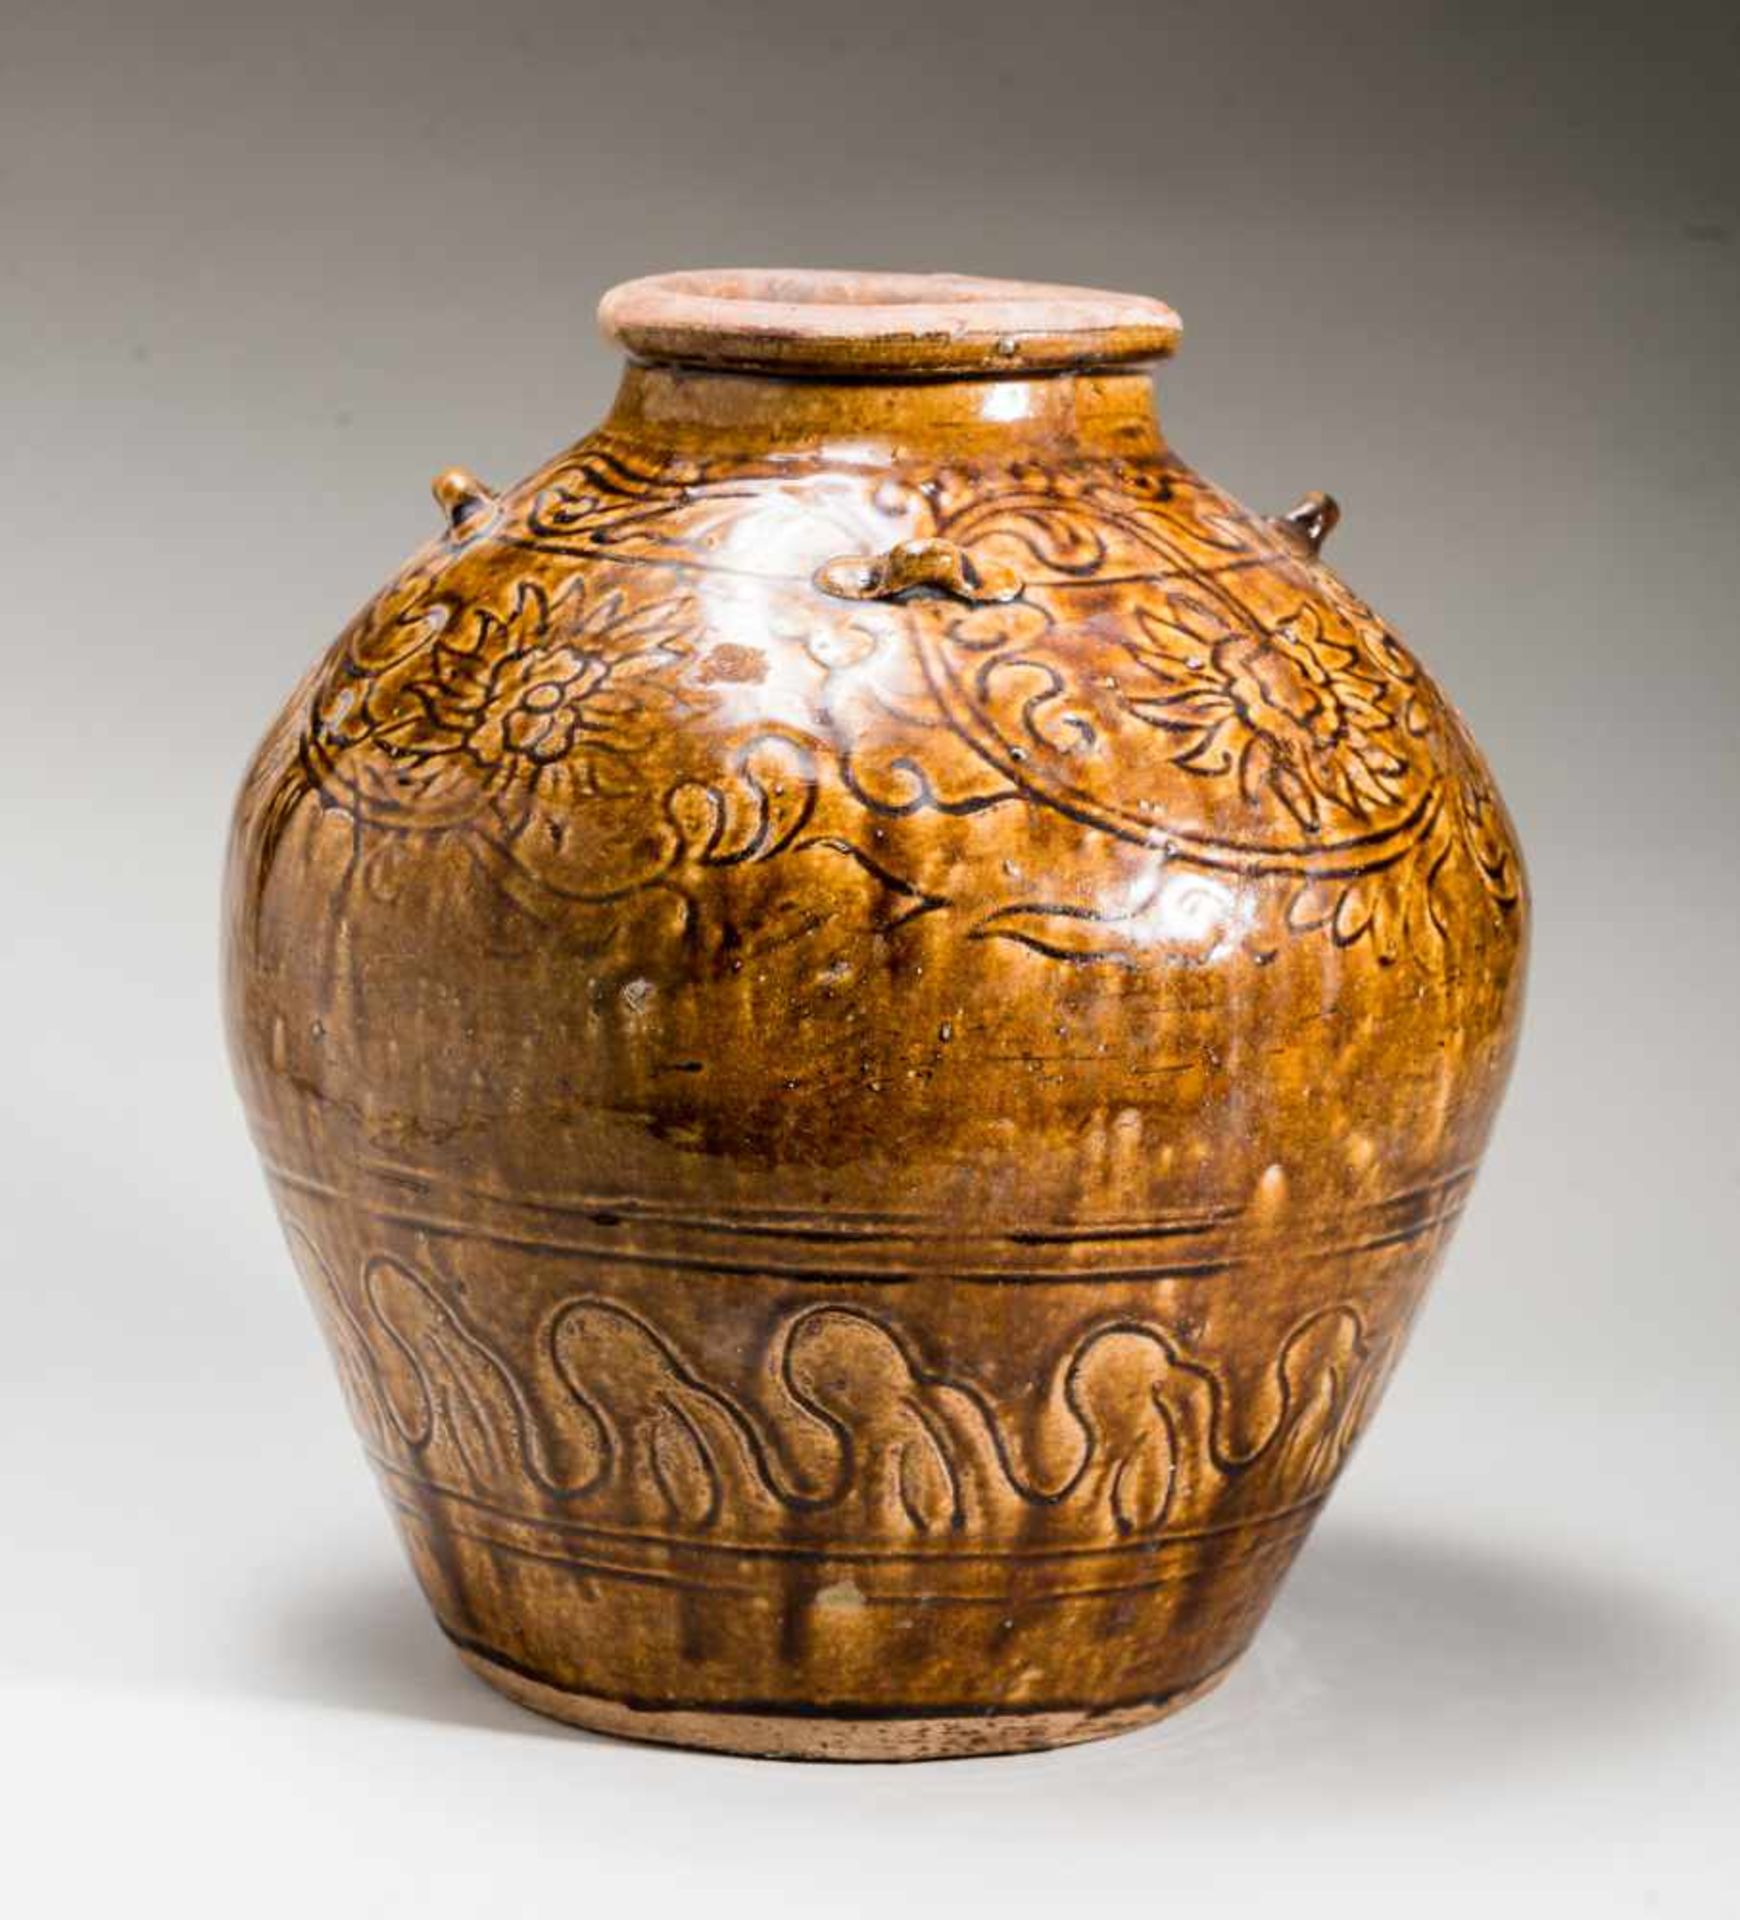 AN OVOID GLAZED CERAMIC VASEGlazed ceramicChina, Qing dynasty (1644-1912)Ovoid form with a flat